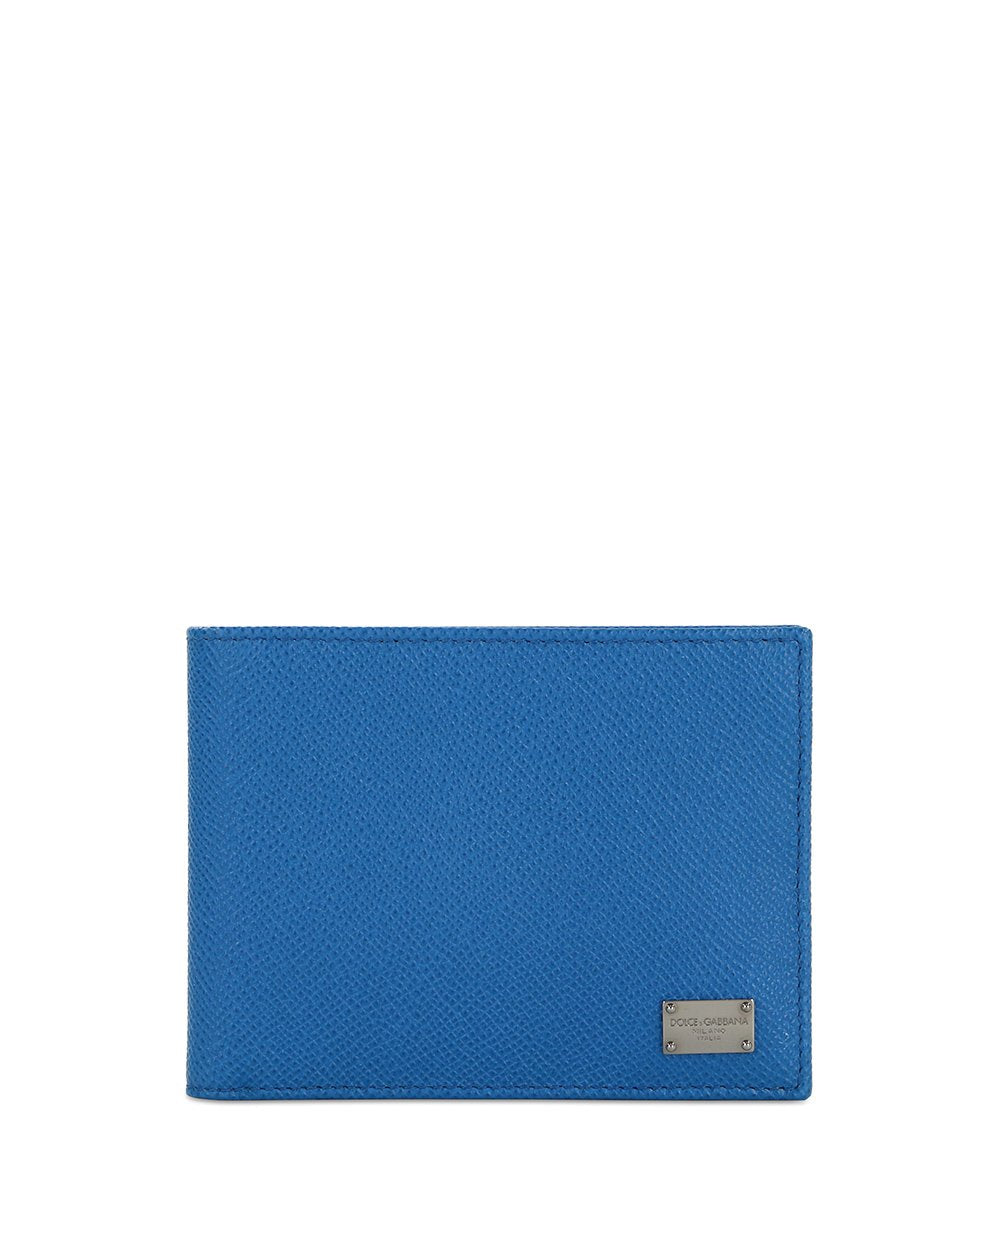 Leather Bi-fold Wallet - ISSI Outlet